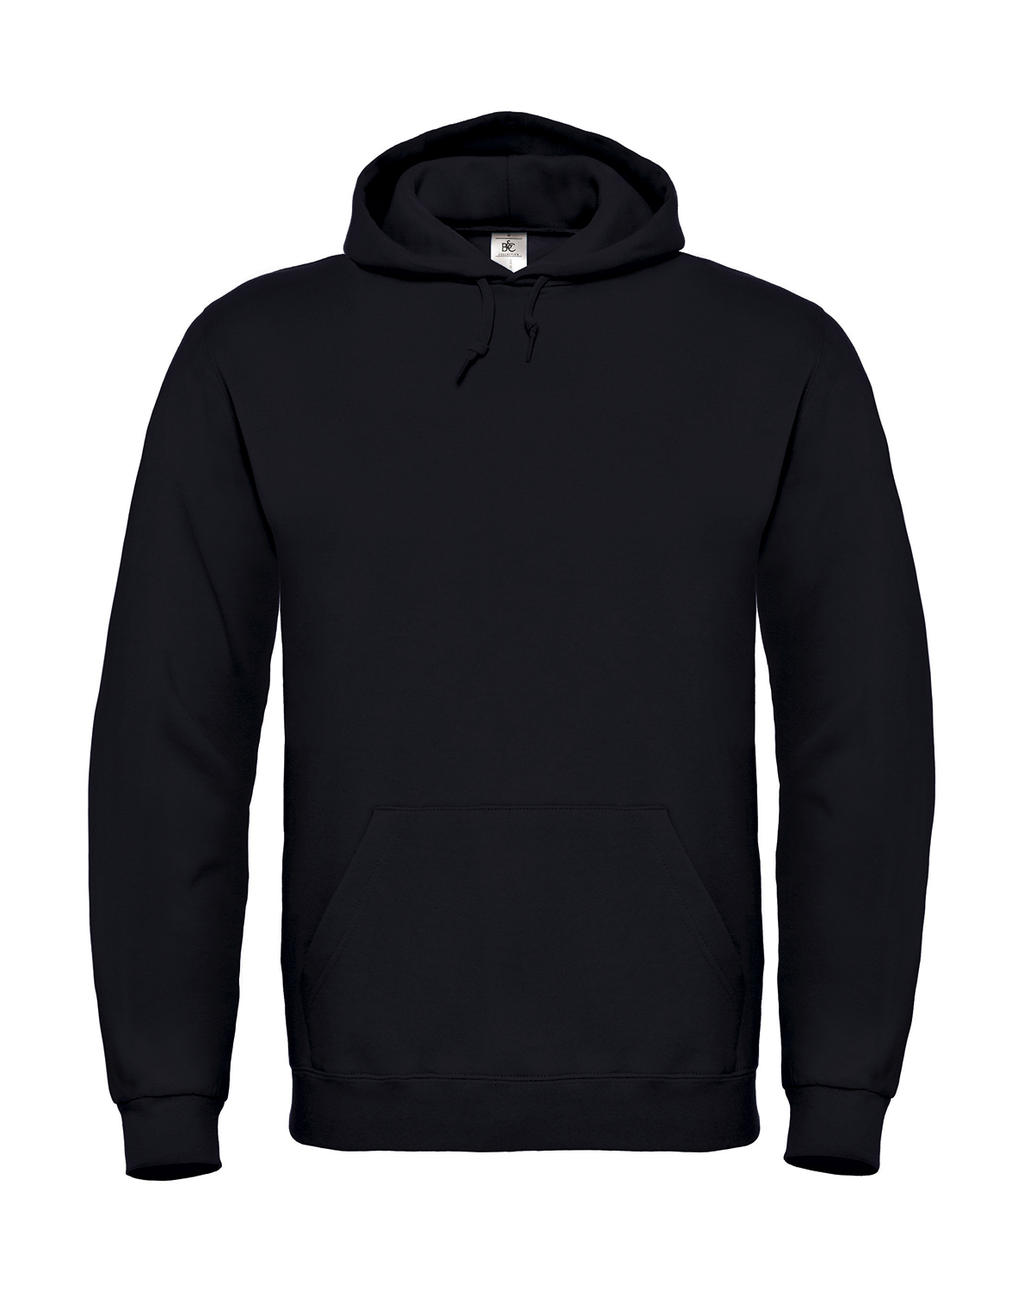  ID.003 Cotton Rich Hooded Sweatshirt in Farbe Black